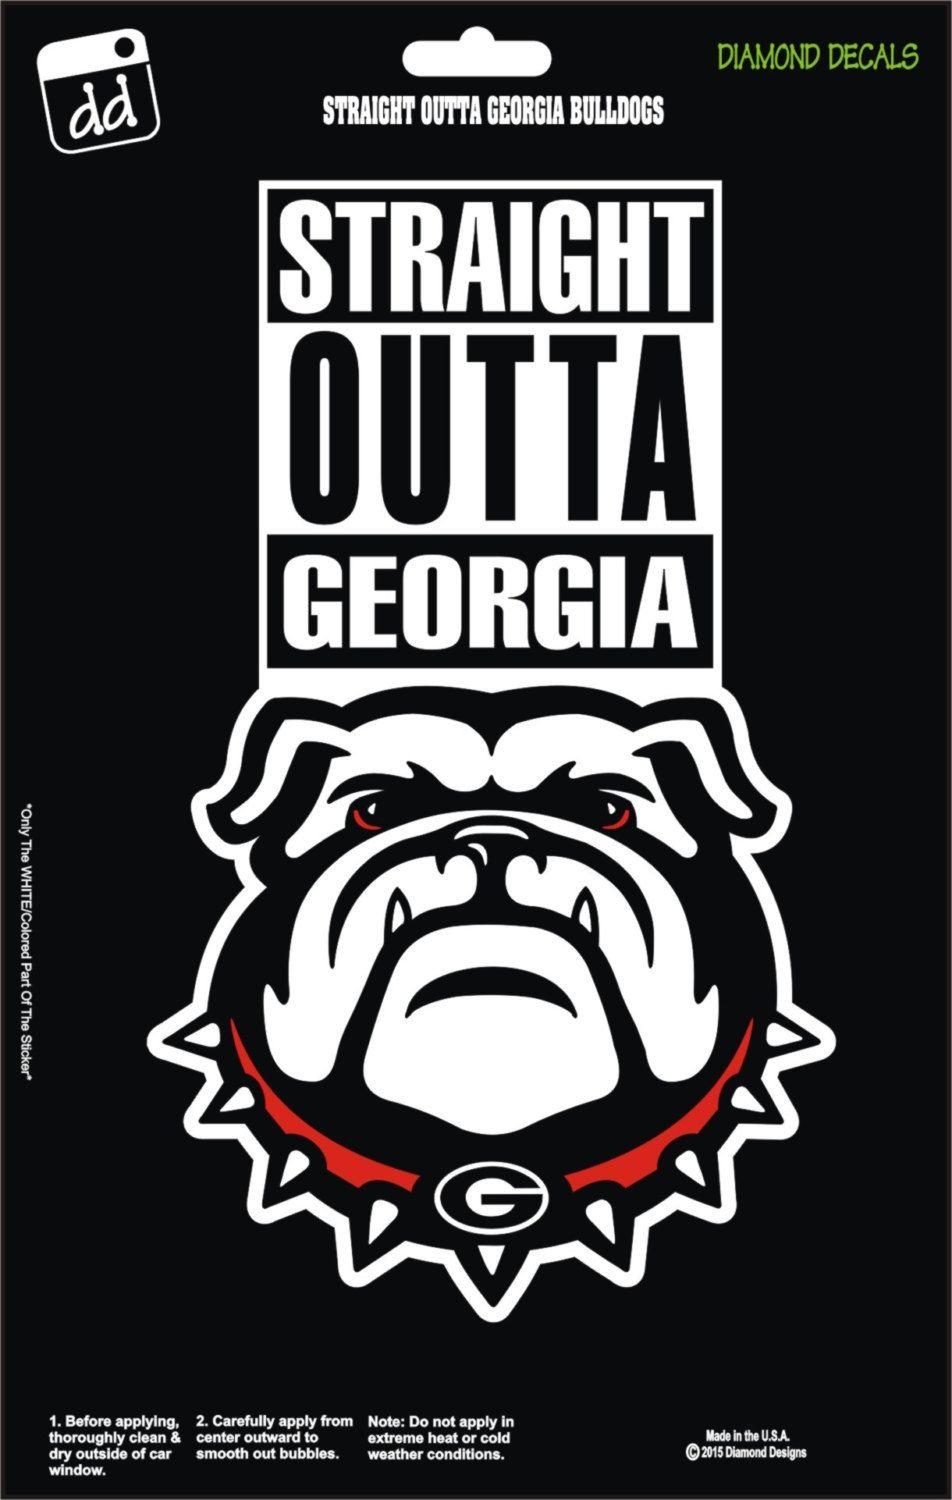 Straight Outta Georgia Bulldogs College NCAA Football Team Decal